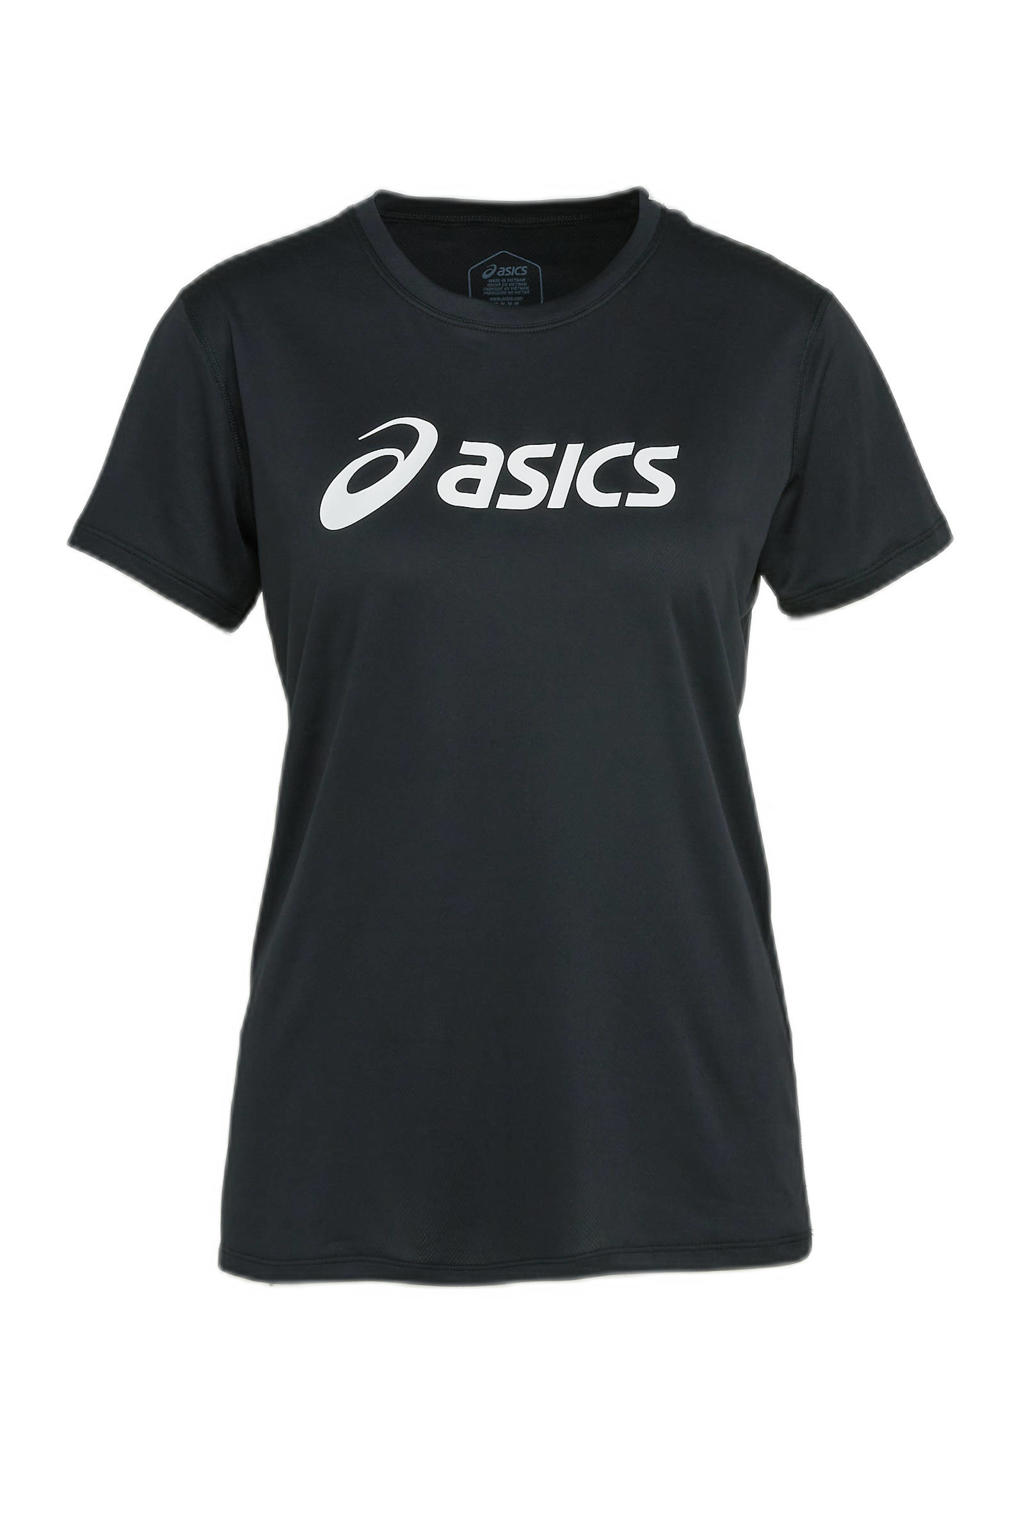 ASICS hardloopshirt Core zwart/wit